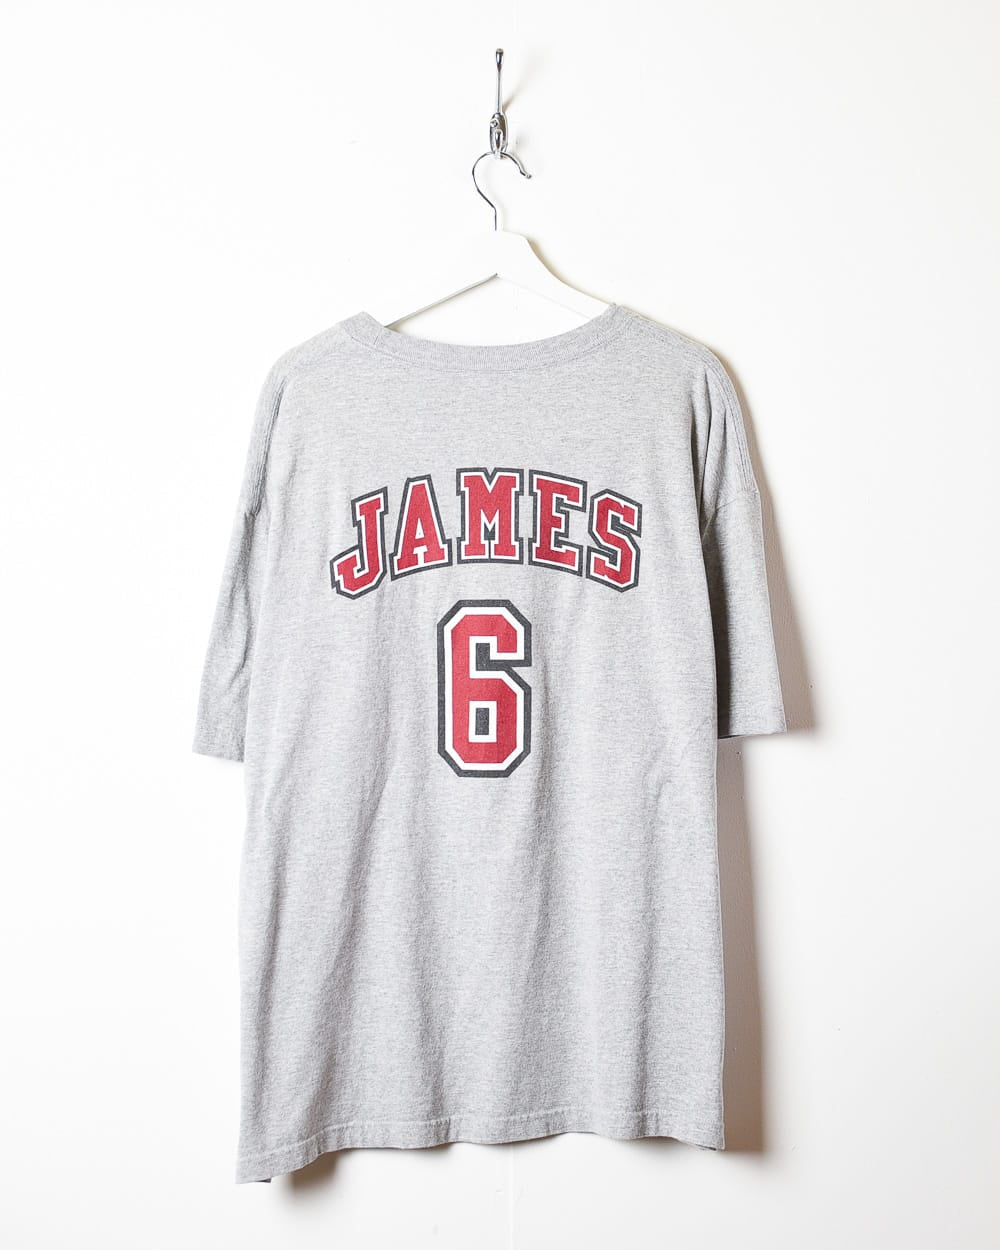 Stone NBA Miami Heat T-Shirt - XX-Large